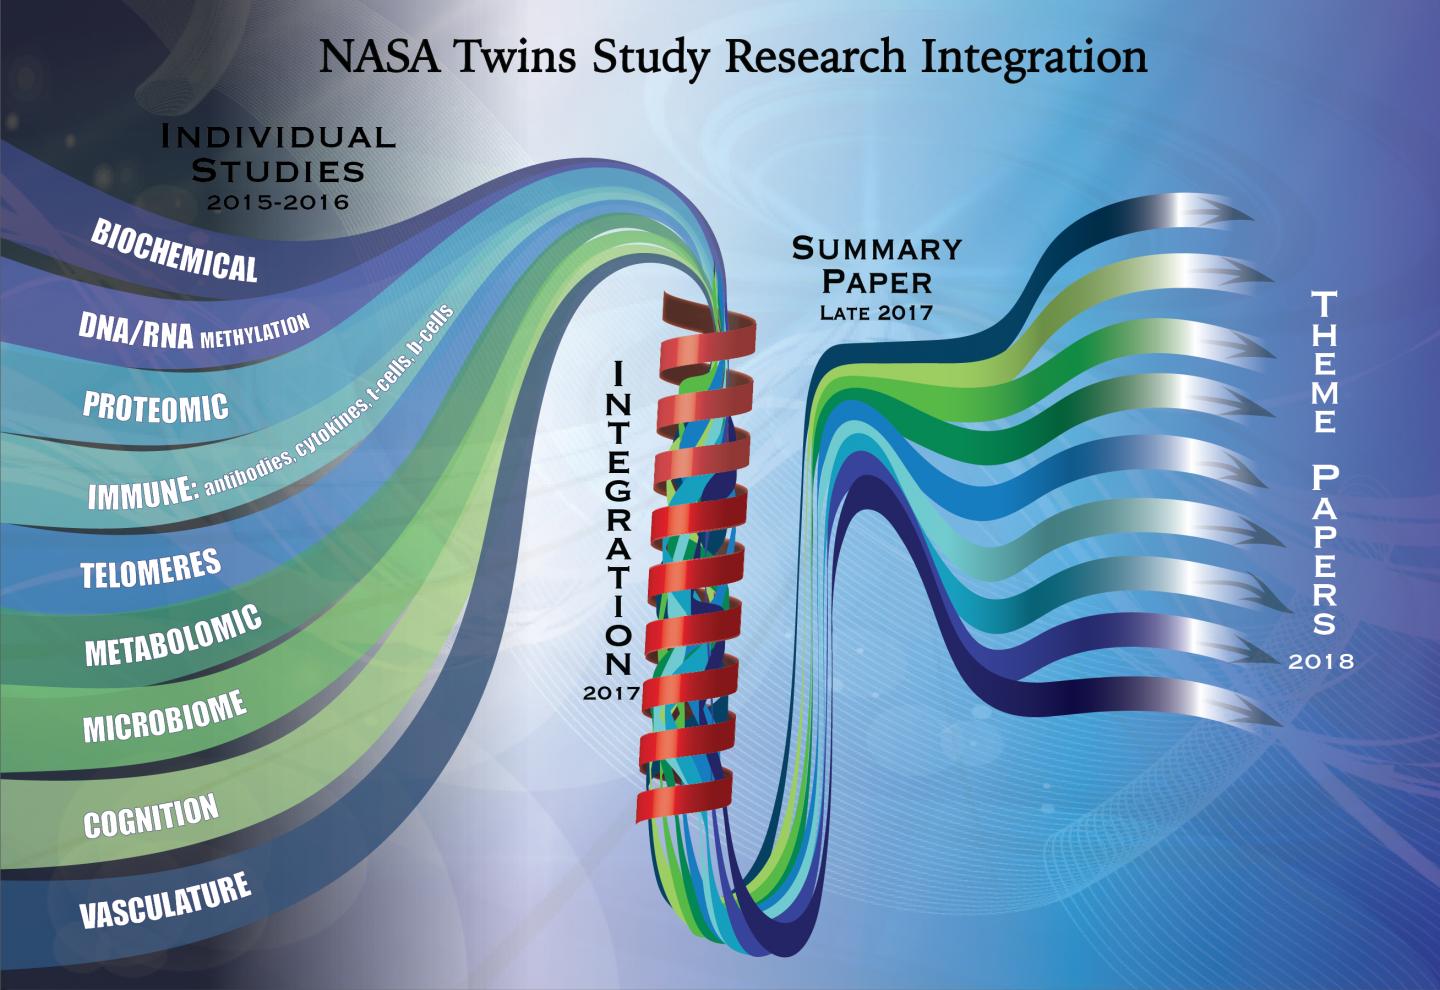 NASA Twins Study Team Begins Integrating Results